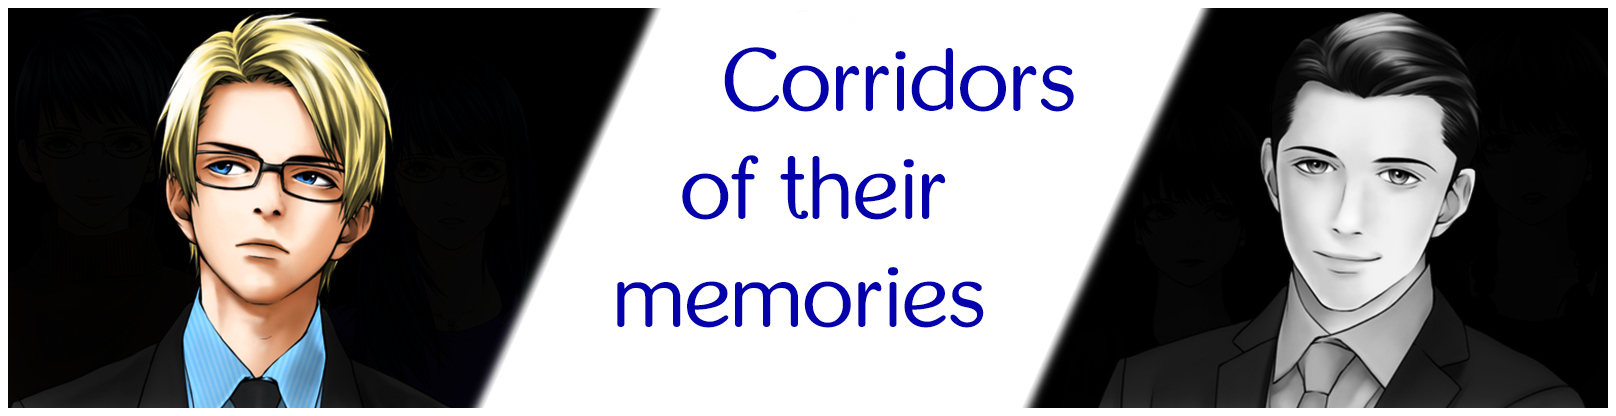 Corridors of their memories